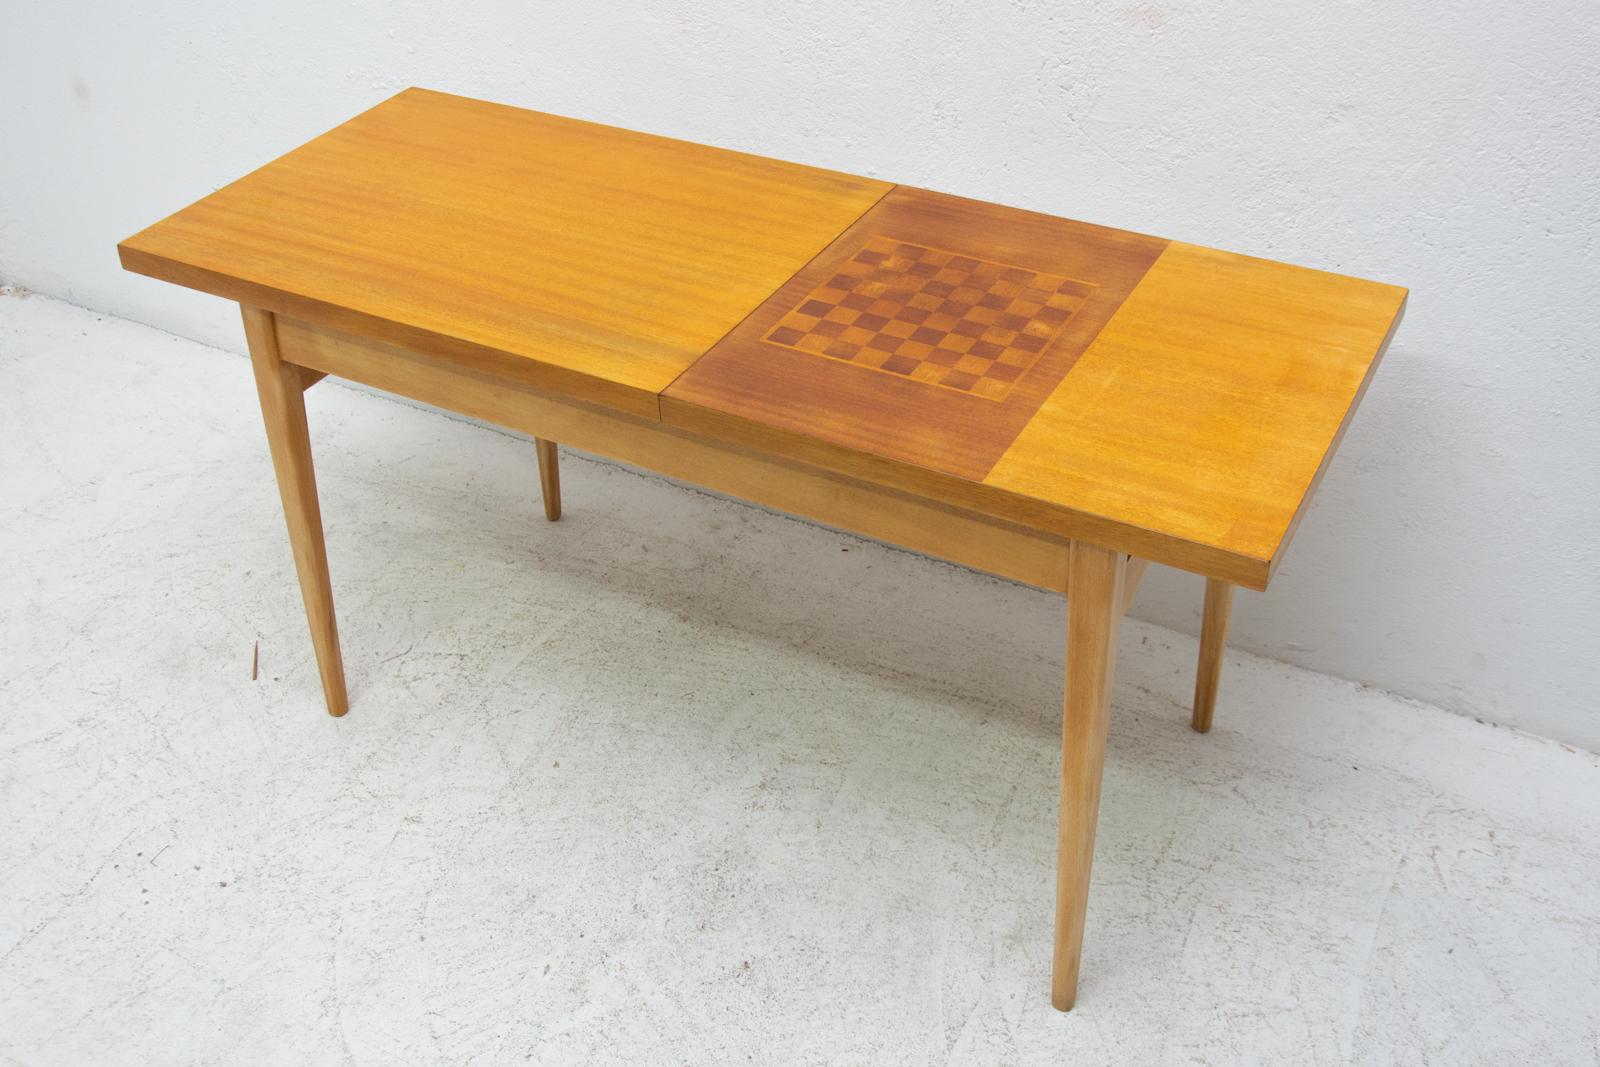 20th Century Midcentury Coffee Table with Chess Pattern, Hikor Písek, 1960s, Czechoslovakia